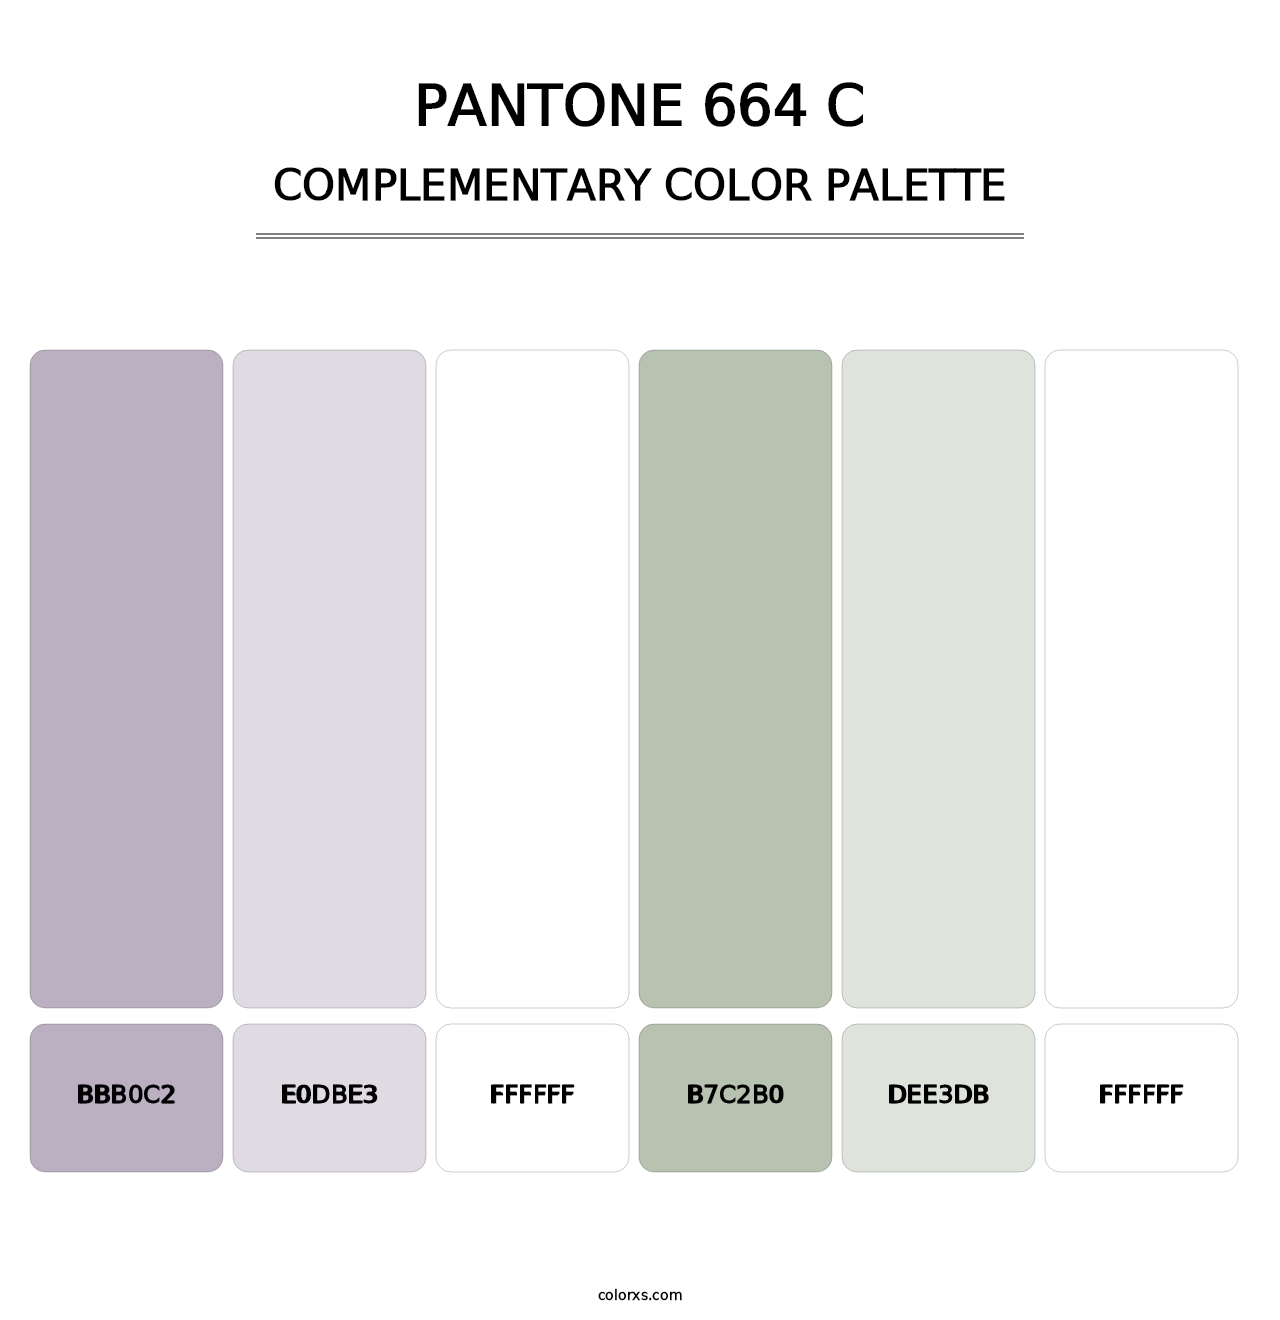 PANTONE 664 C - Complementary Color Palette